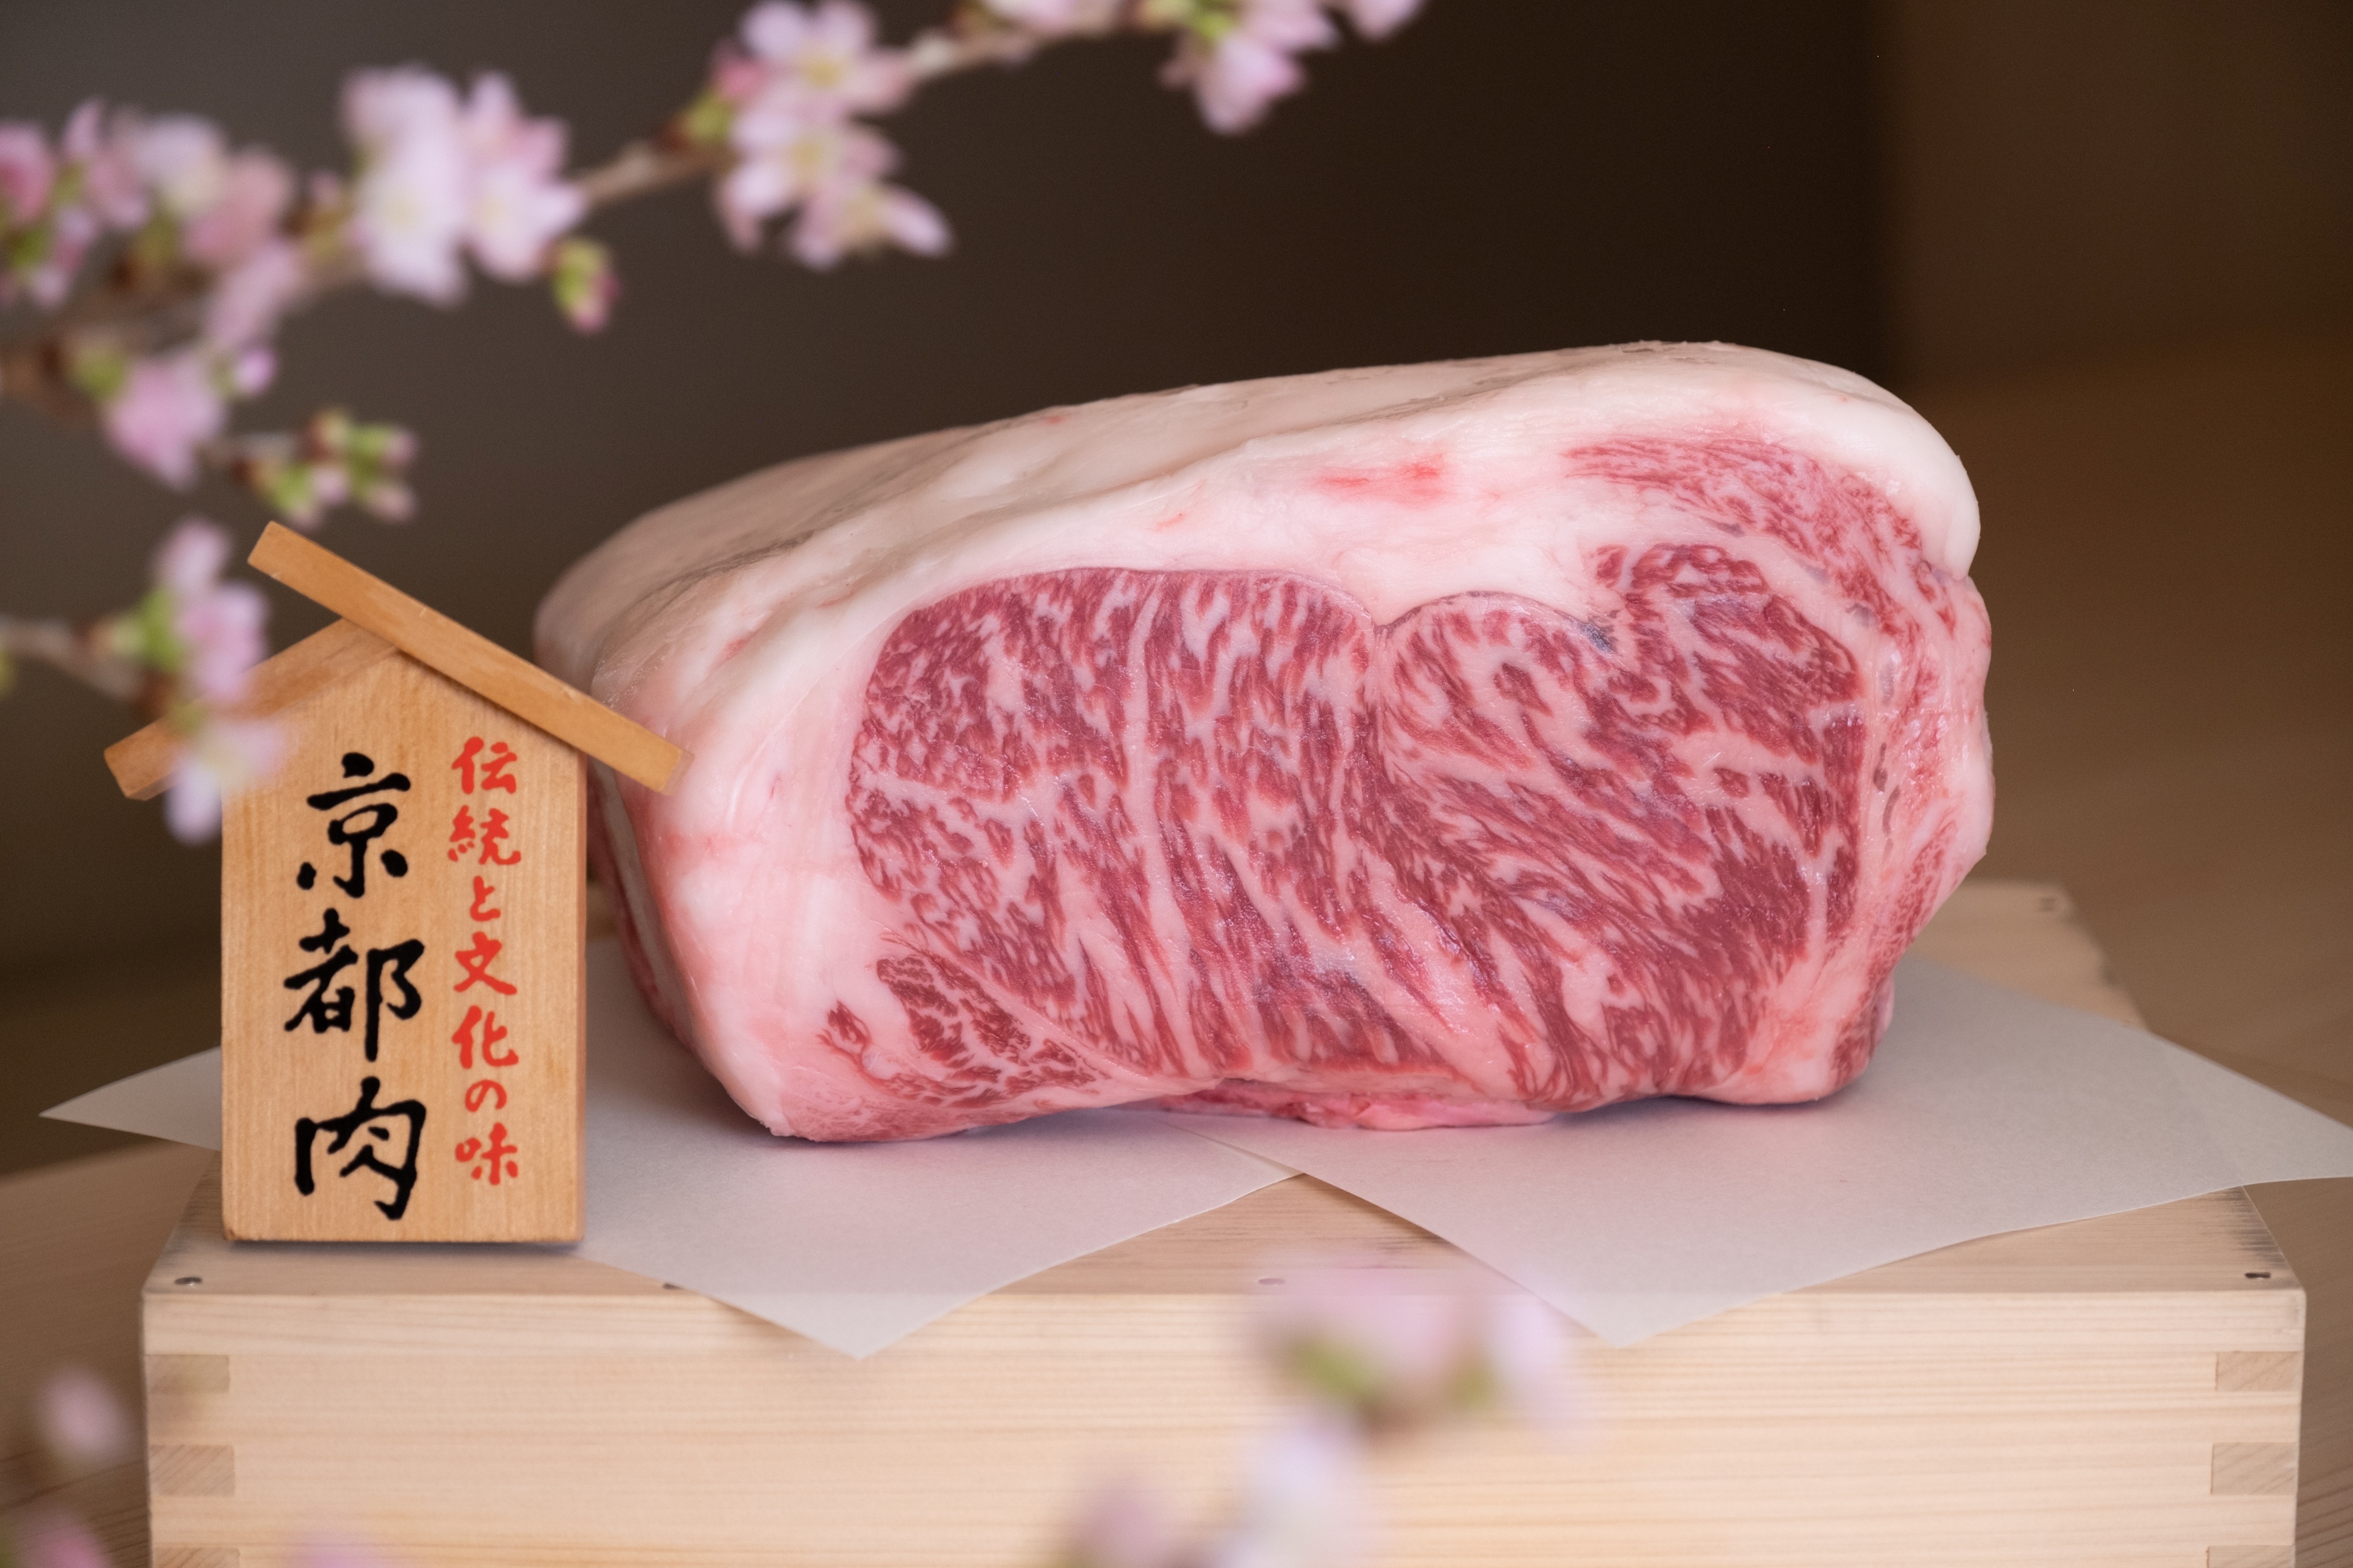 「THE JUNEI HOTEL 京都」併設レストラン「肉割烹ふたご」、
希少な京都牛と、和食の真髄を届ける
最高峰 肉割烹の「京都牛」フルコース提供開始